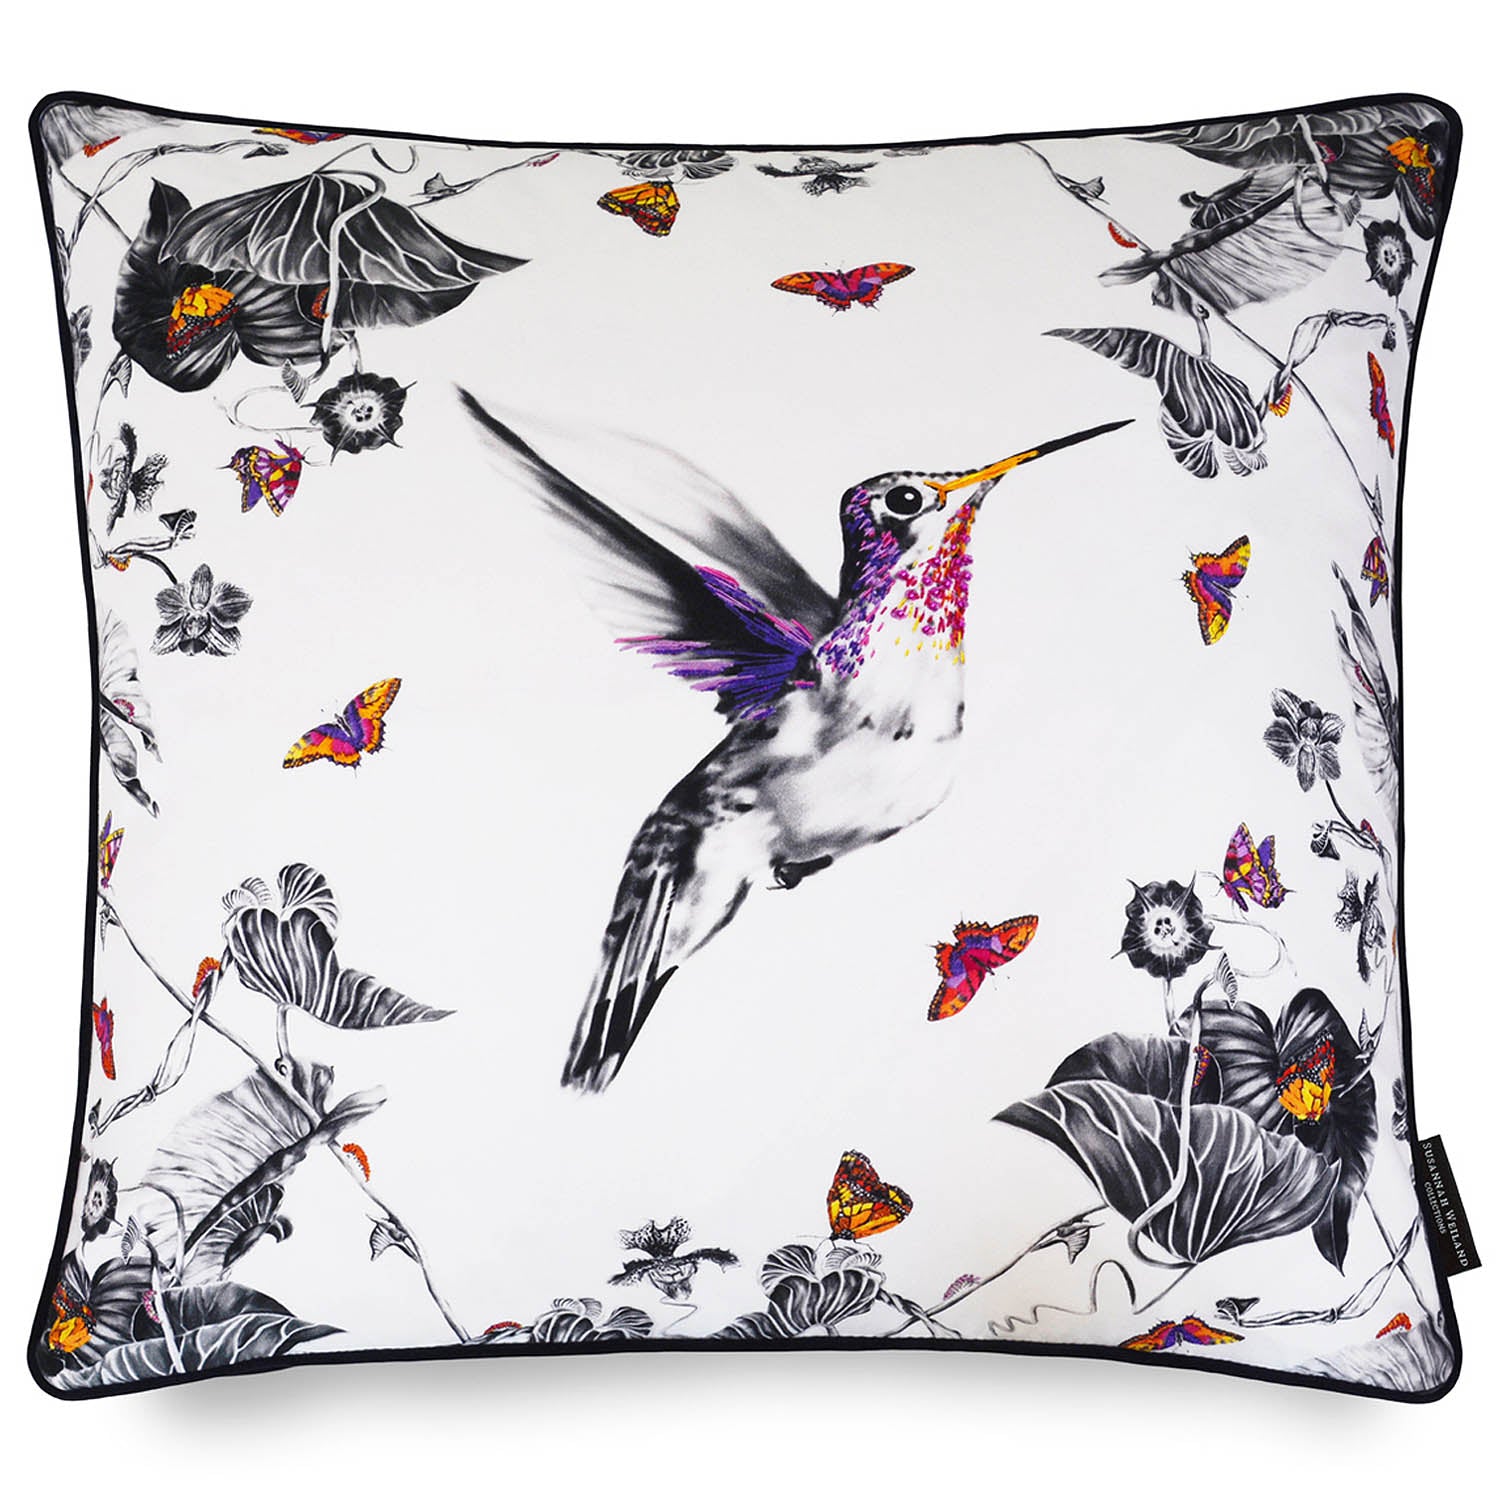 The Hummingbird Hand Embroidered Cushion